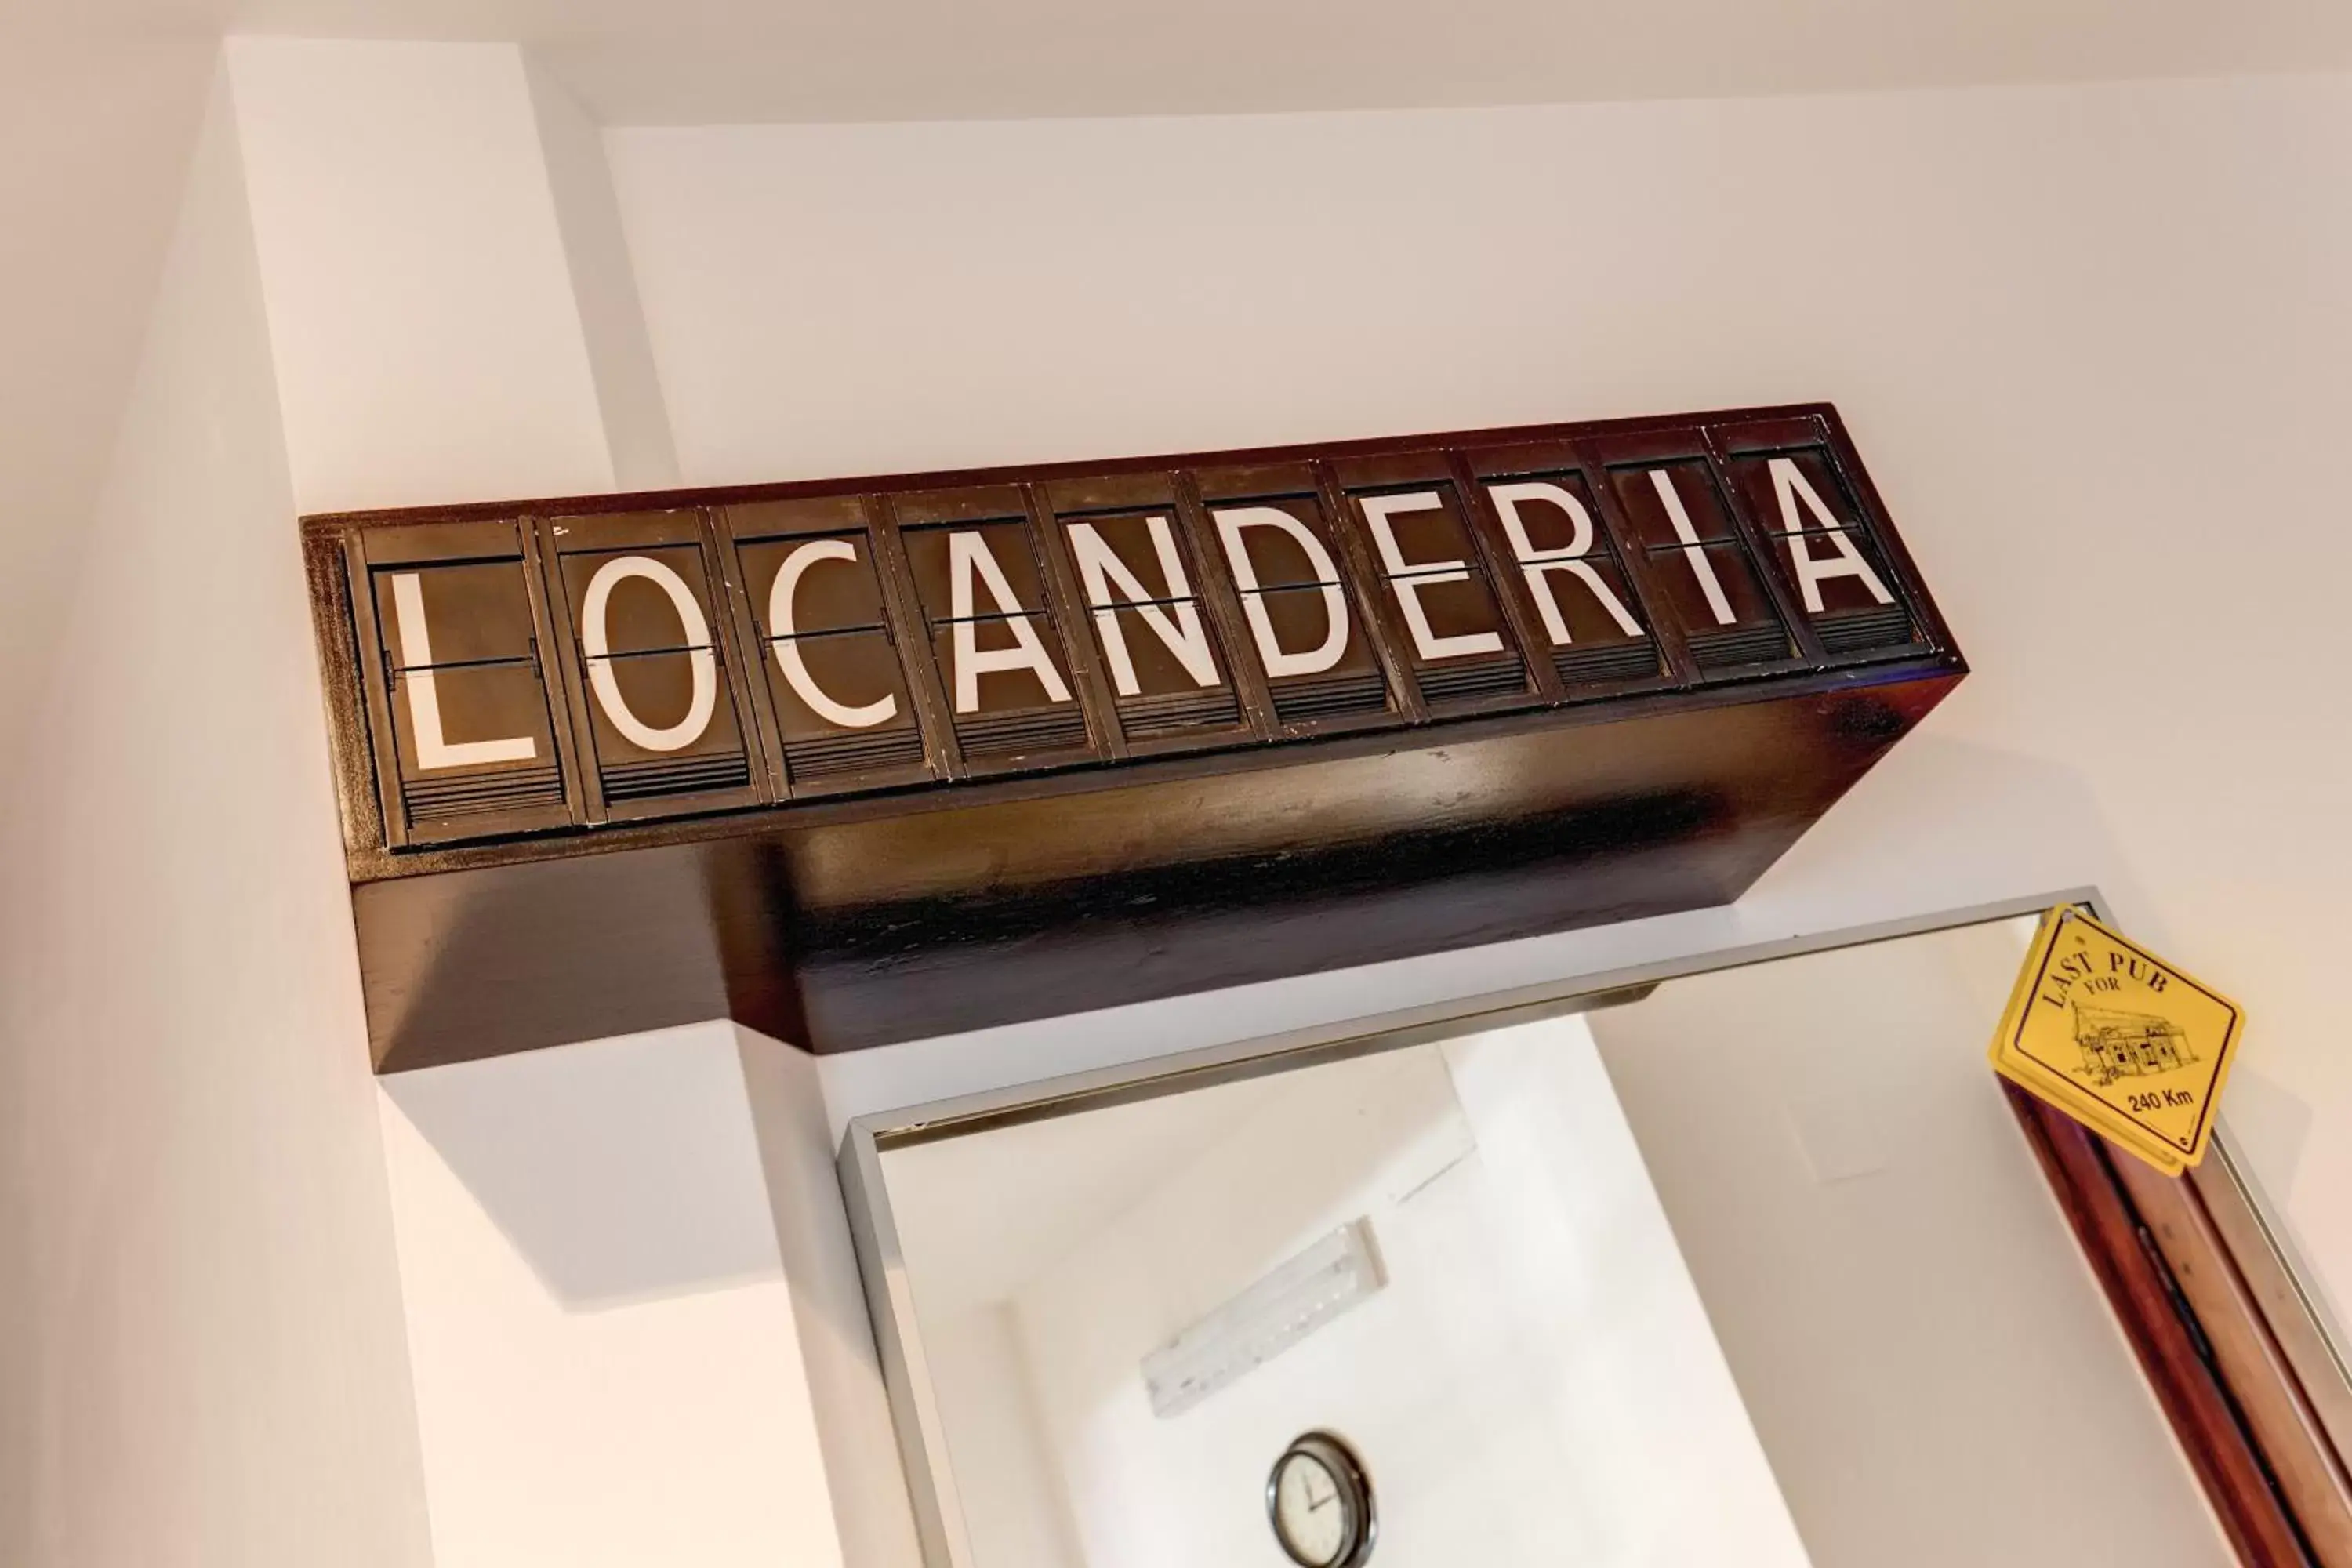 Property logo or sign in Locanderia Roma